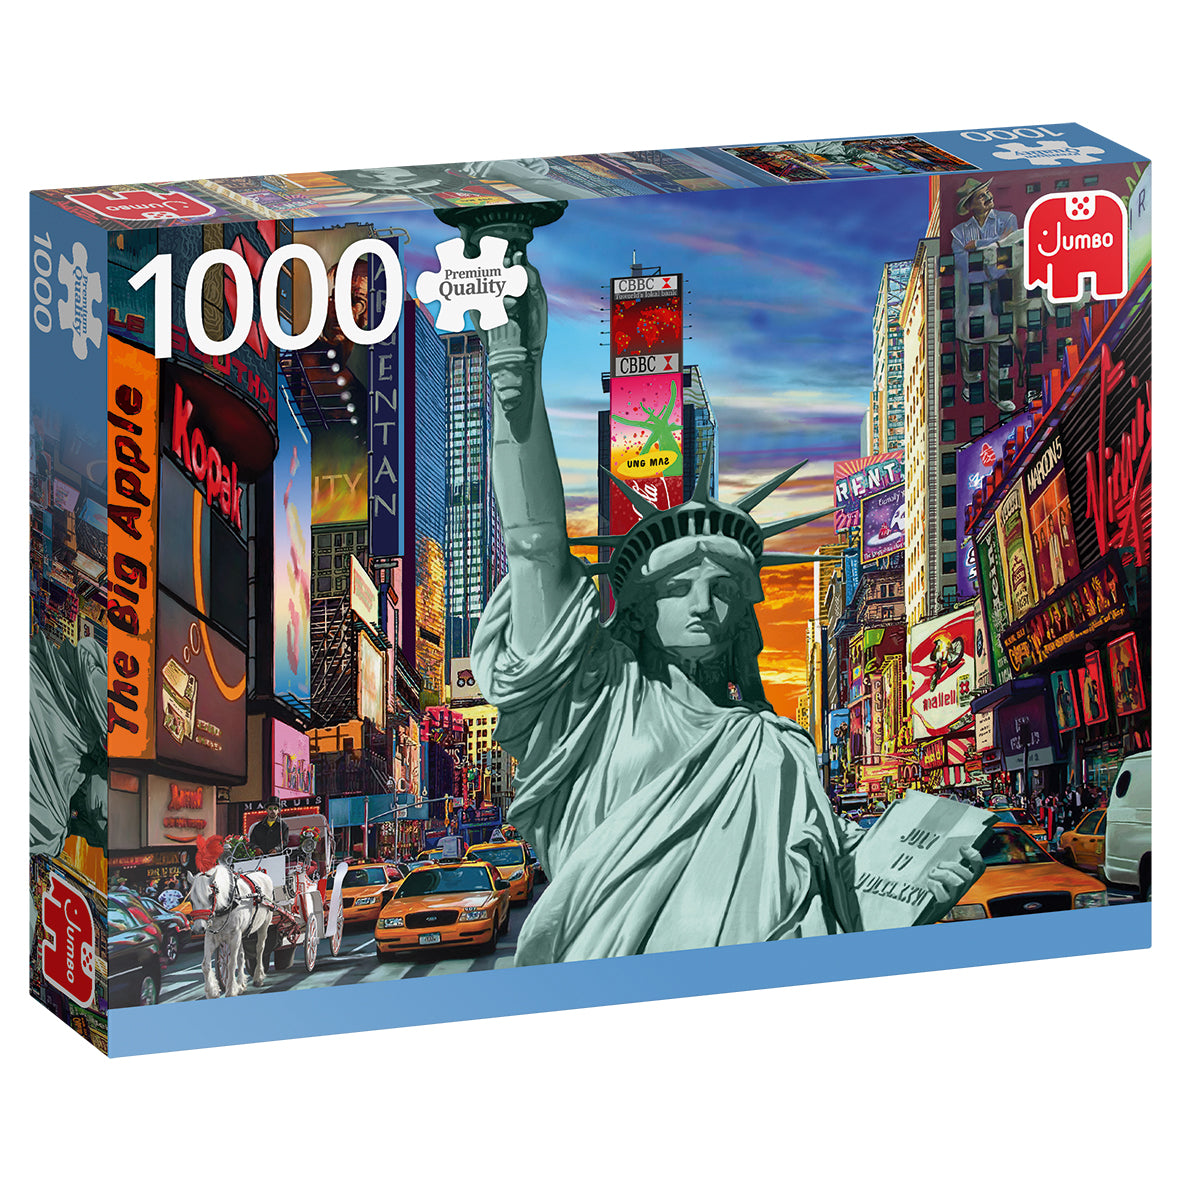 Premium Collection - New York City -1000 pieces - product image - Jumboplay.com